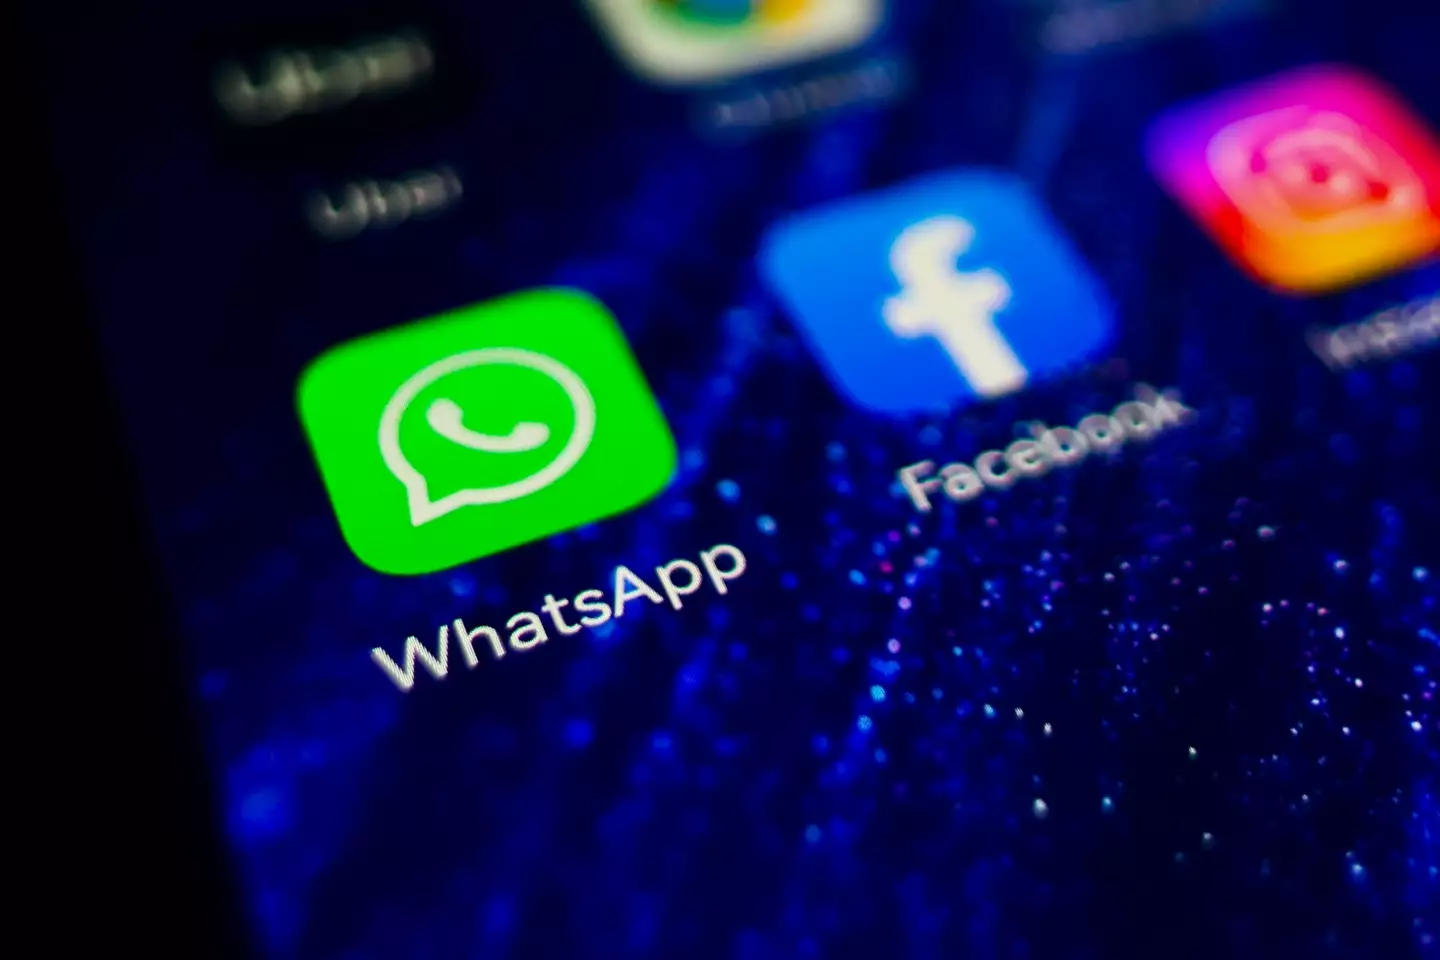 WhatsApp users aren't happy about the tweak. (Beata Zawrzel/NurPhoto via Getty Images)